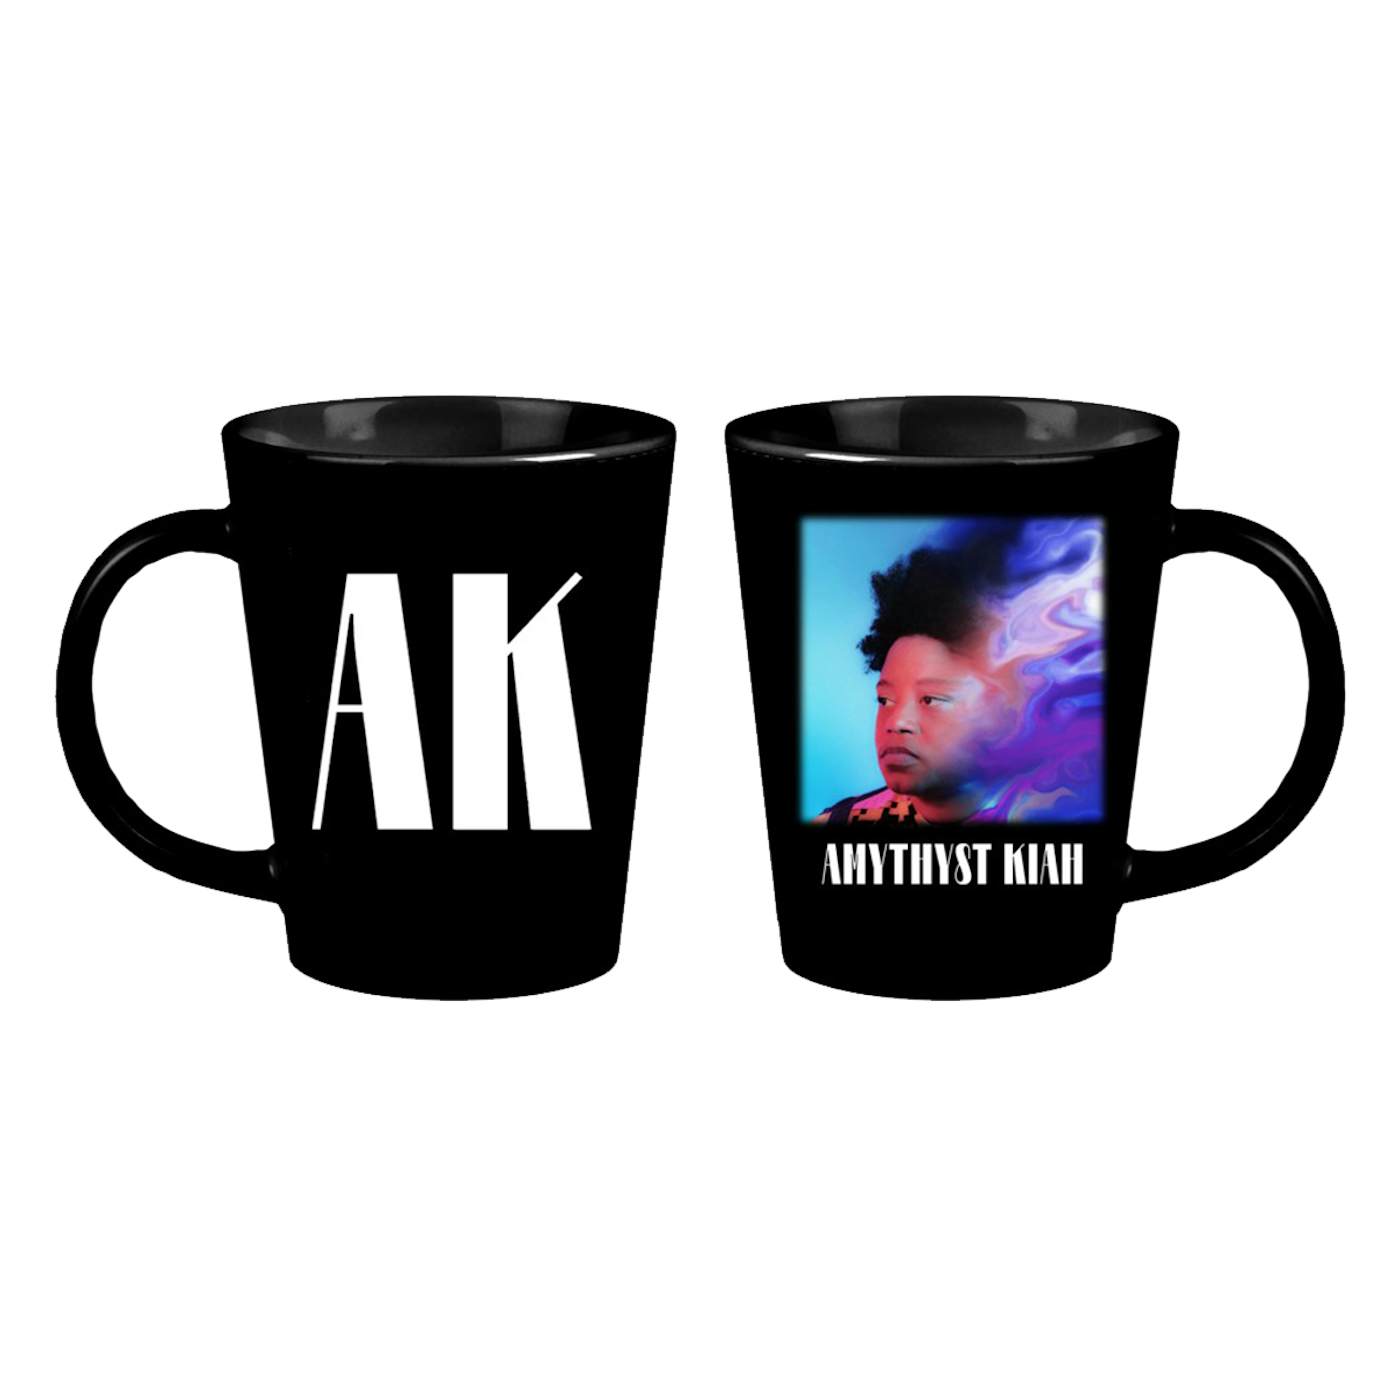 Amythyst Kiah "Wary + Strange" 12oz. Black Coffee Mug